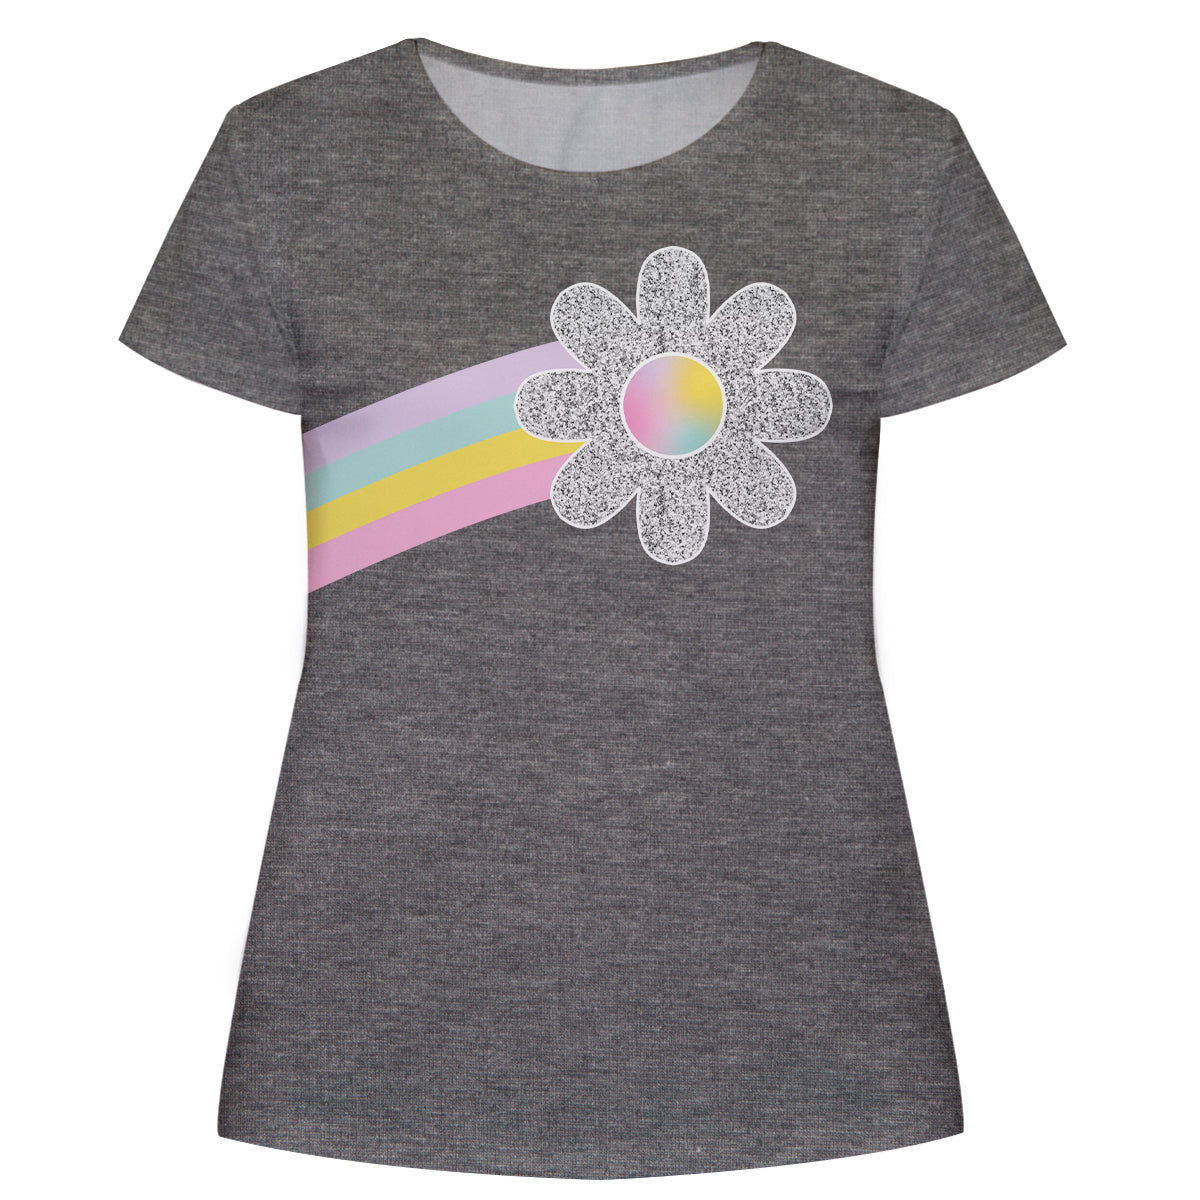 Flower and Rainbow Gray and Yellow Short Sleeve Tee Shirt